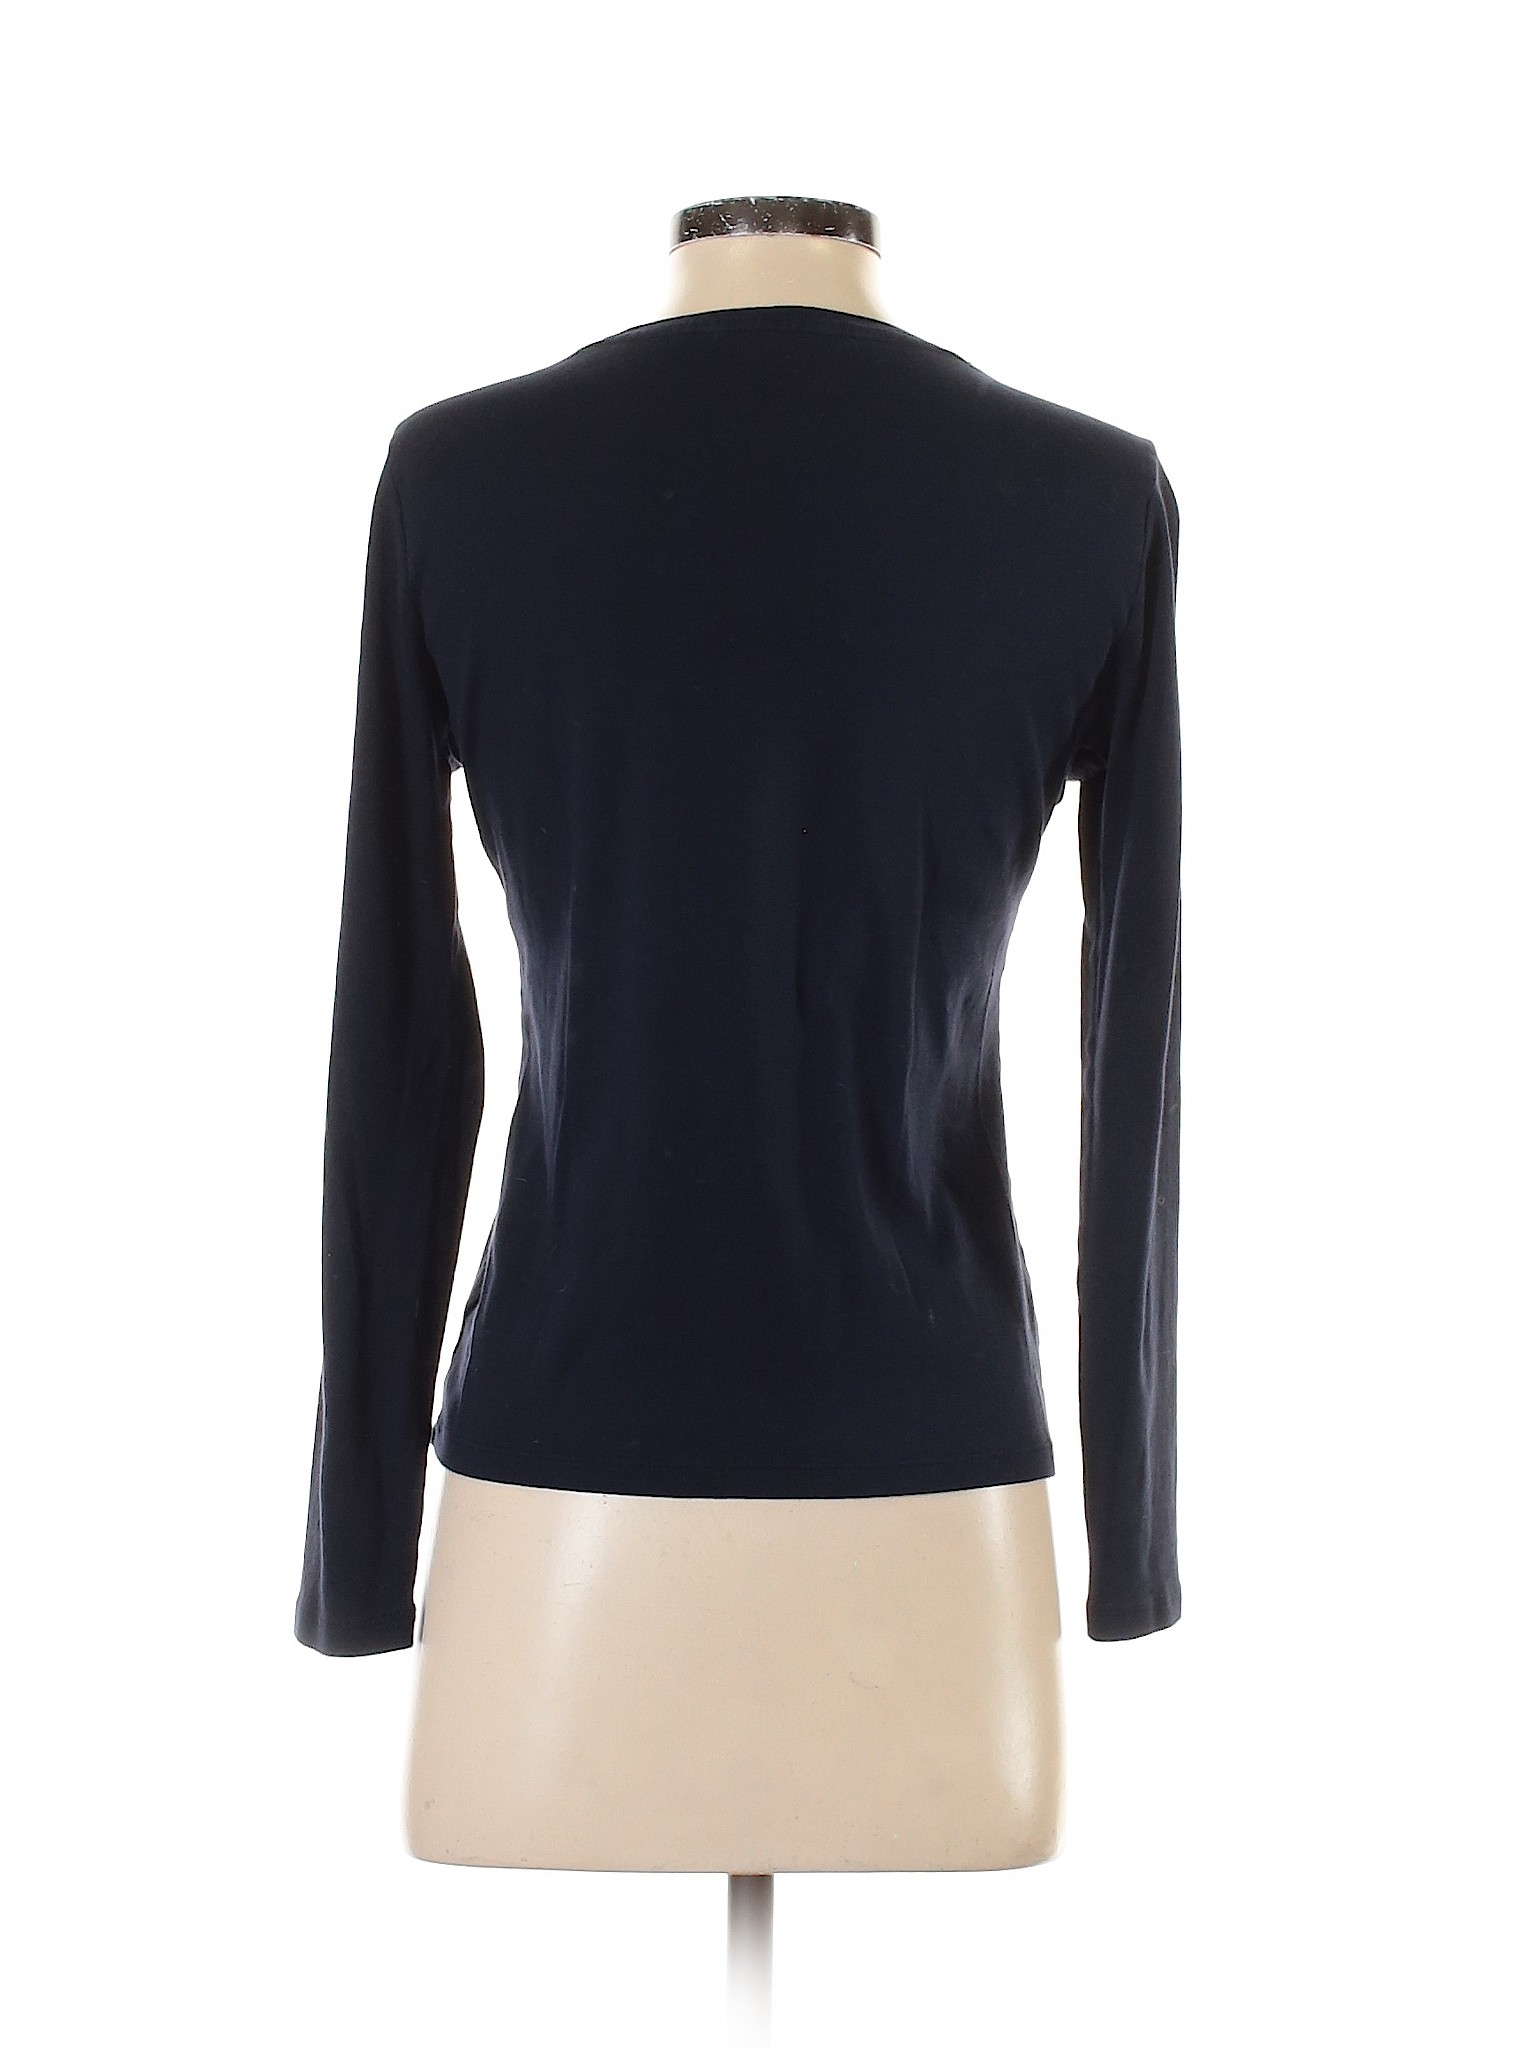 Talbots Women Black Long Sleeve T-Shirt S Petites | eBay